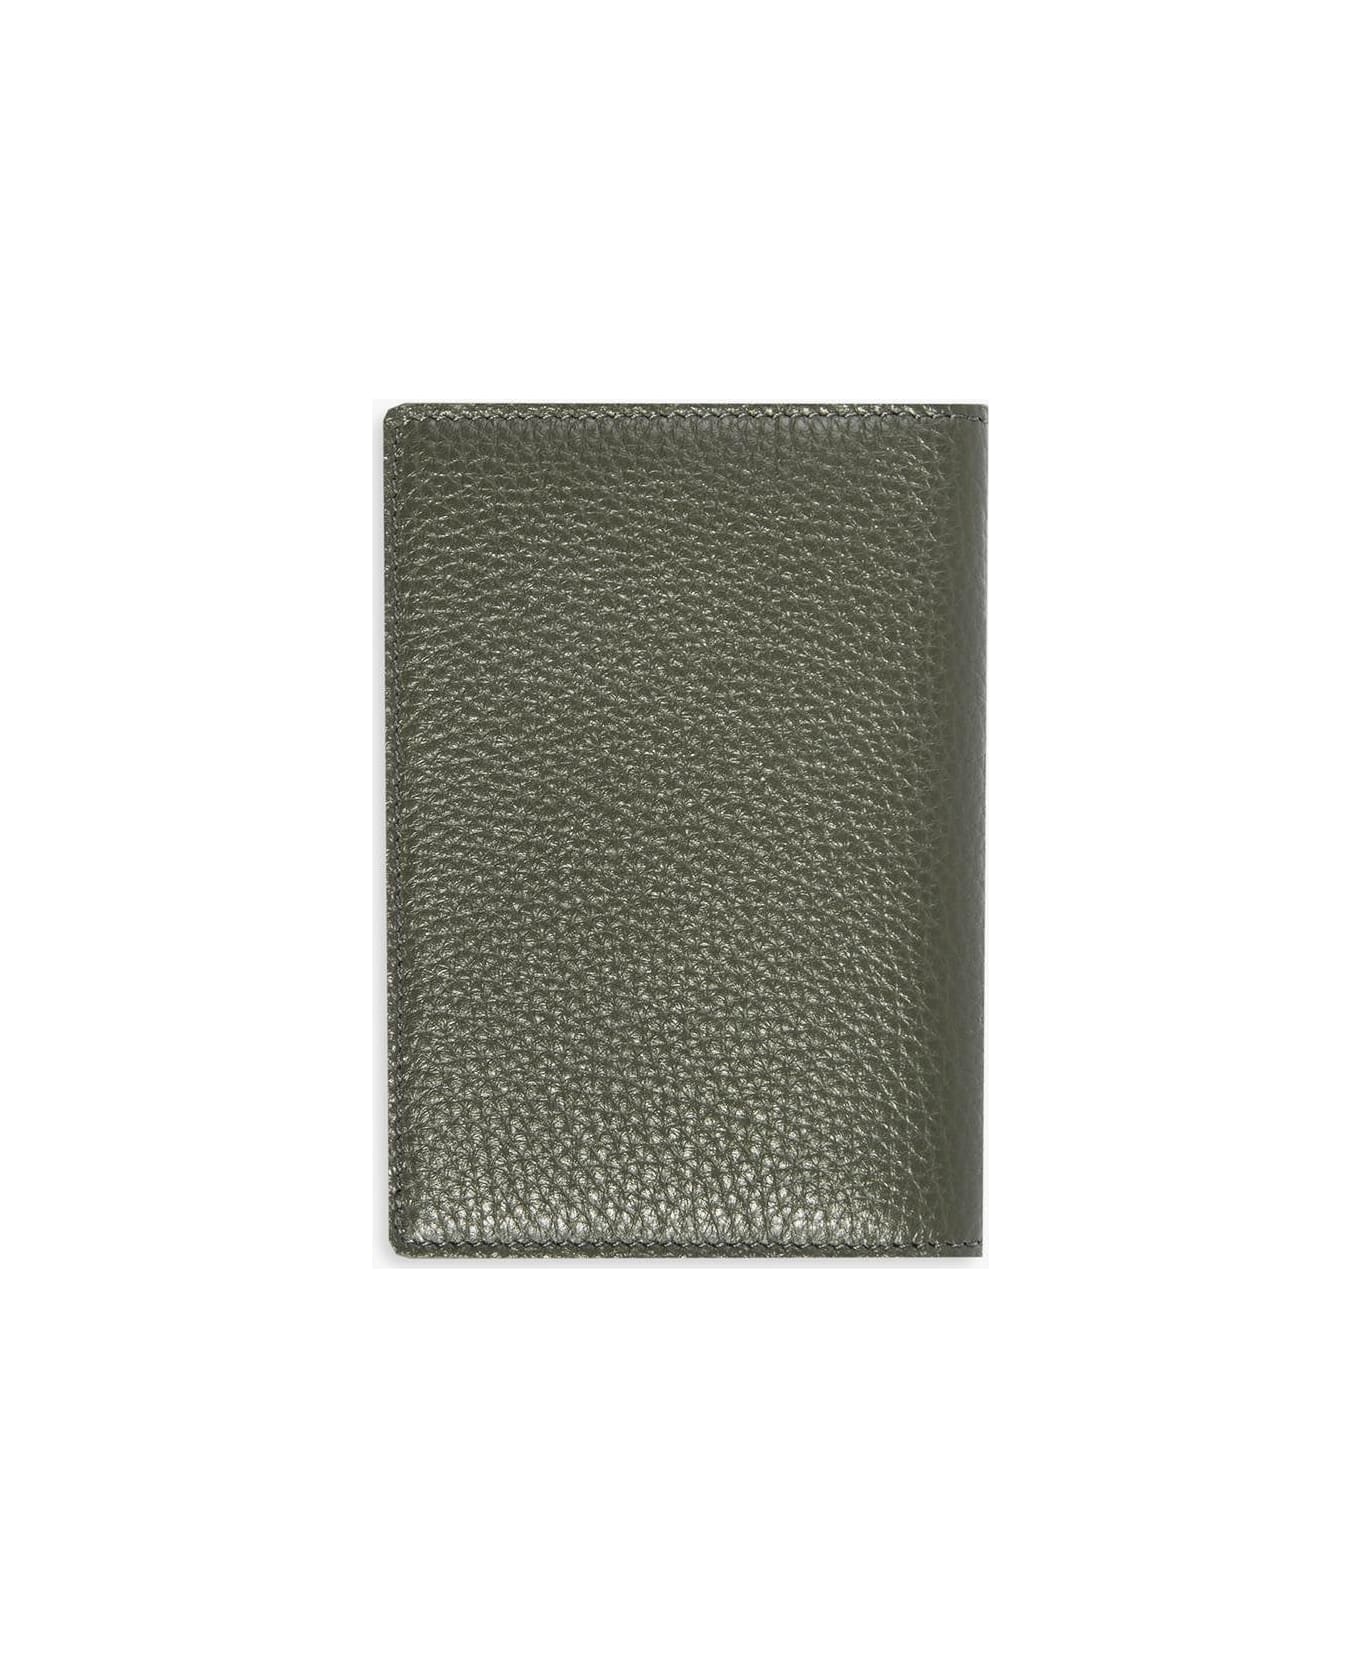 Larusmiani Passport Cover 'fiumicino' Wallet - Olive